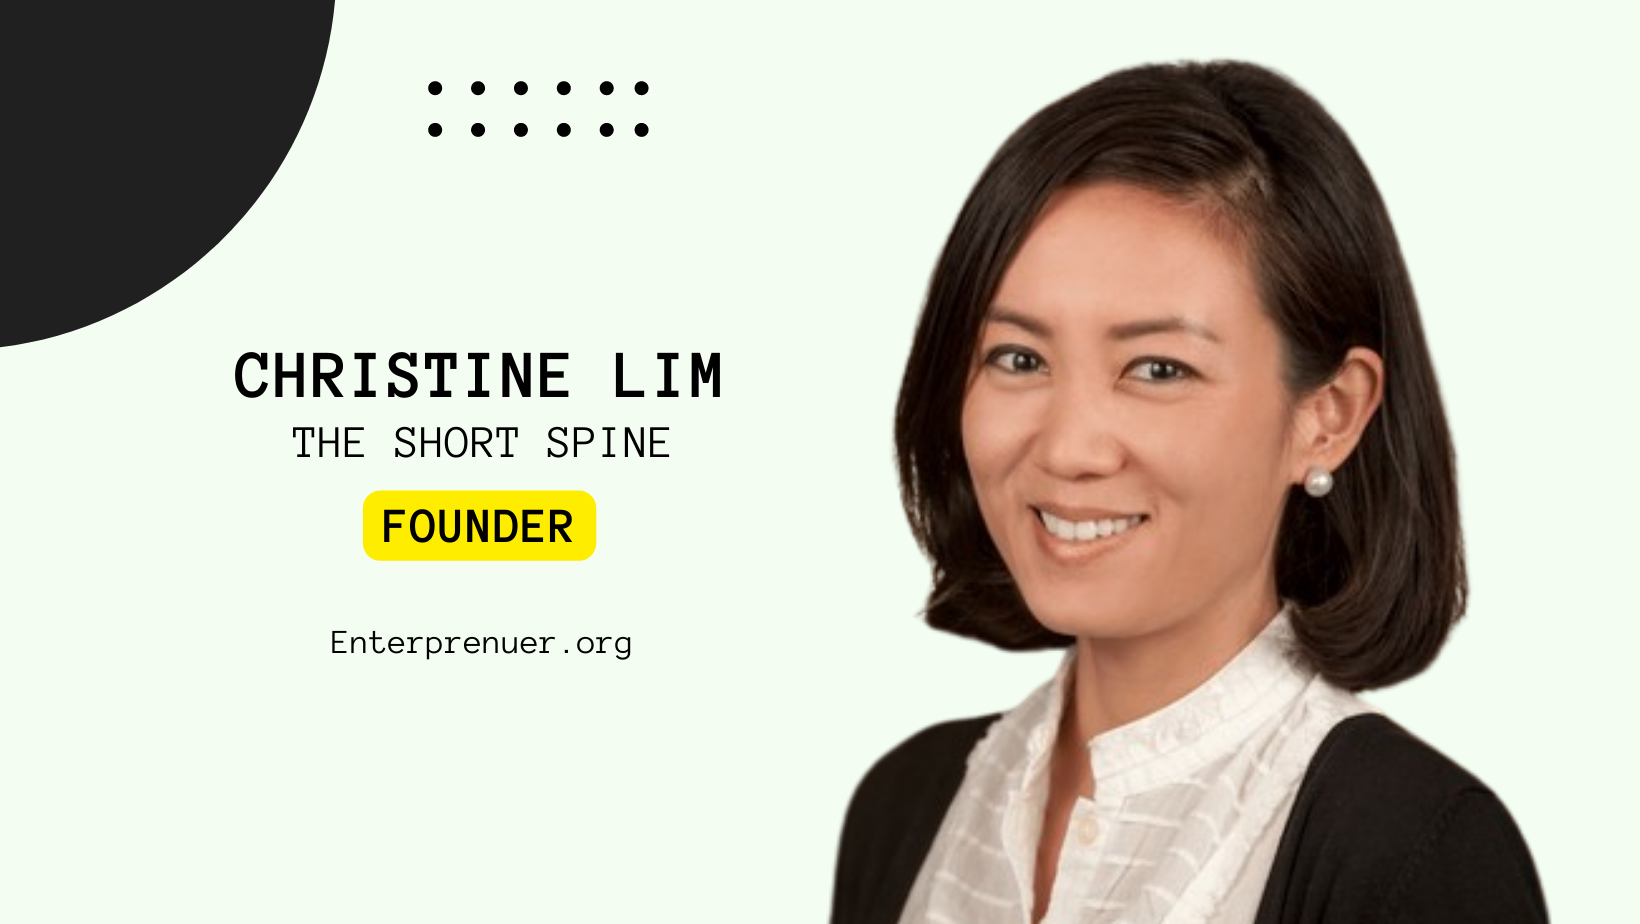 Christine Lim Founder of The Short Spine